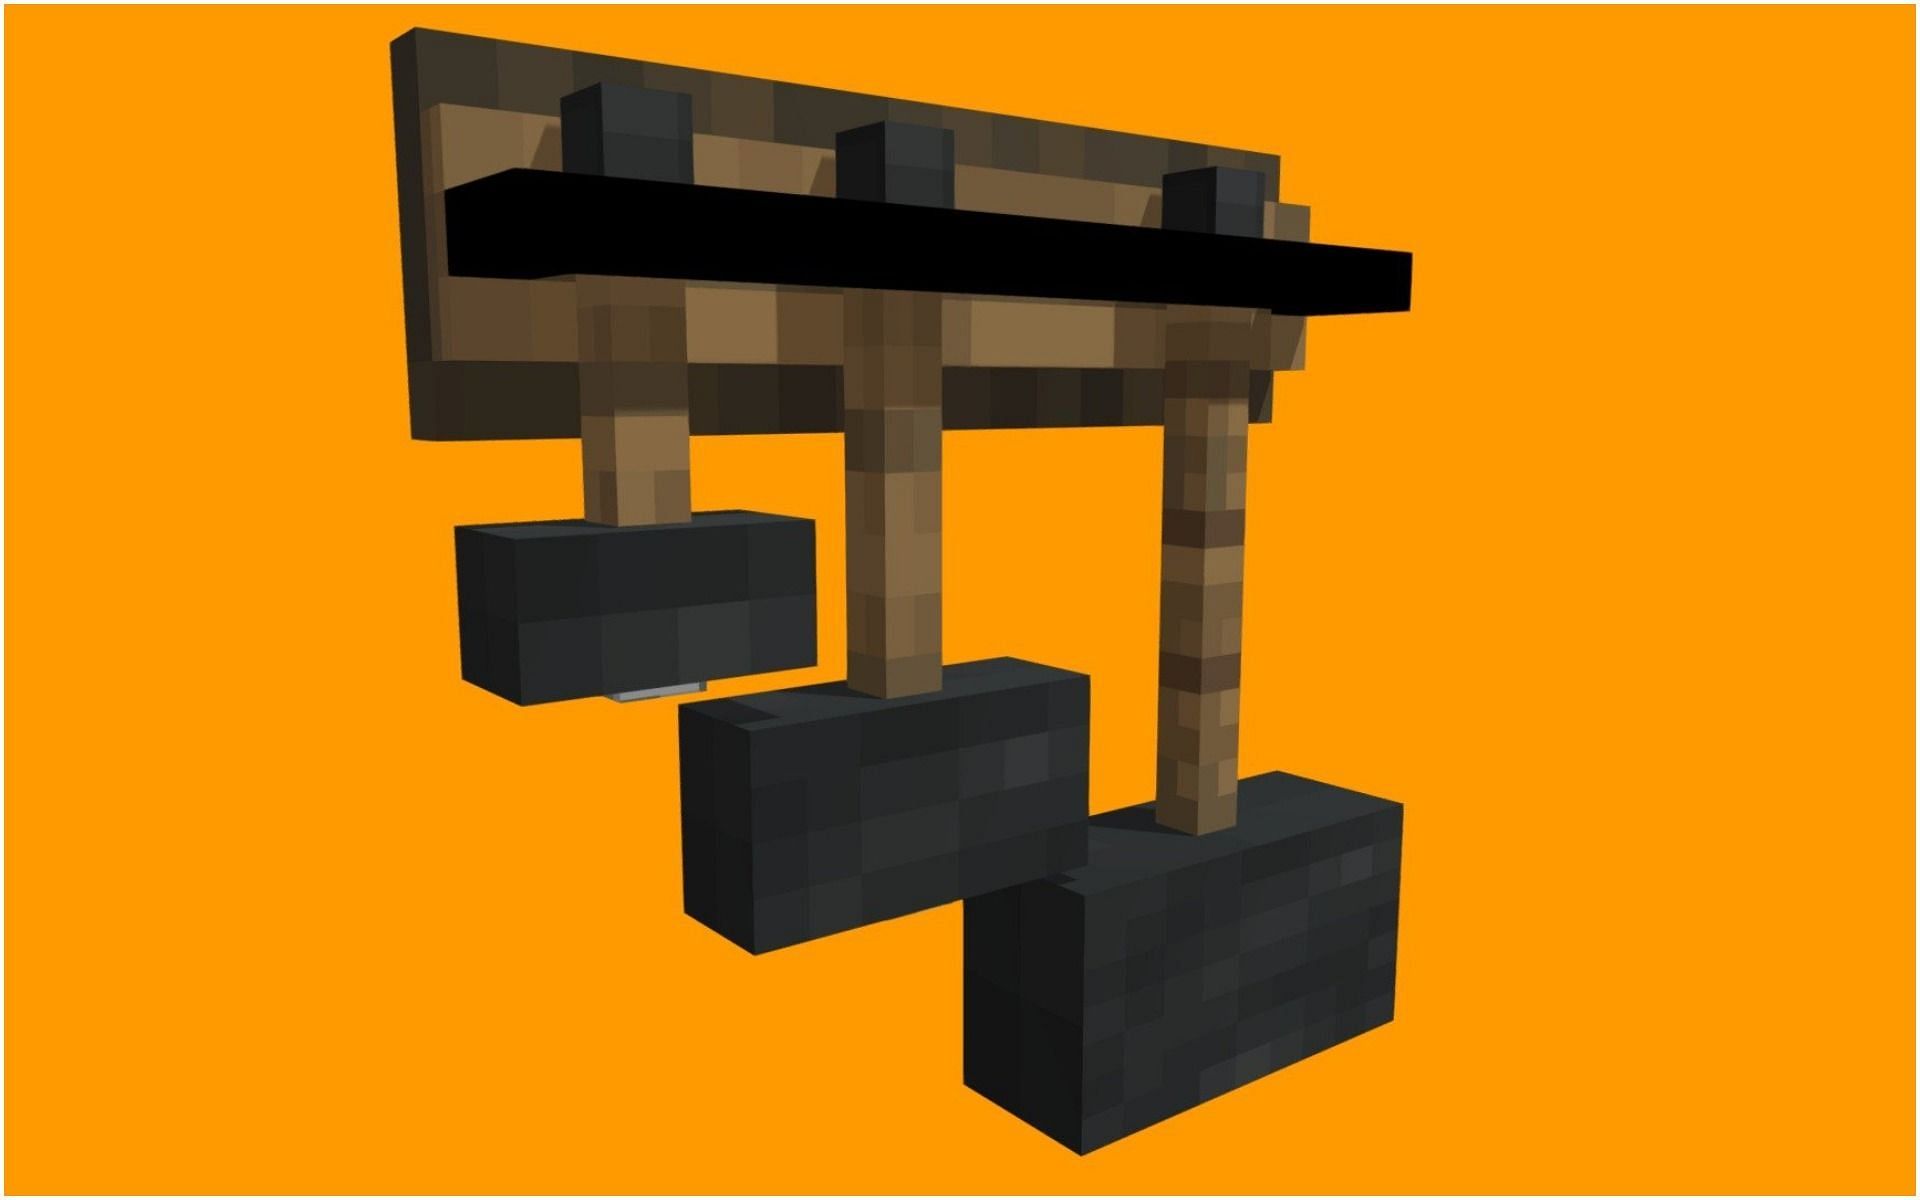 A blacksmith hammer concept in Minecraft (Image via Sketchfab)